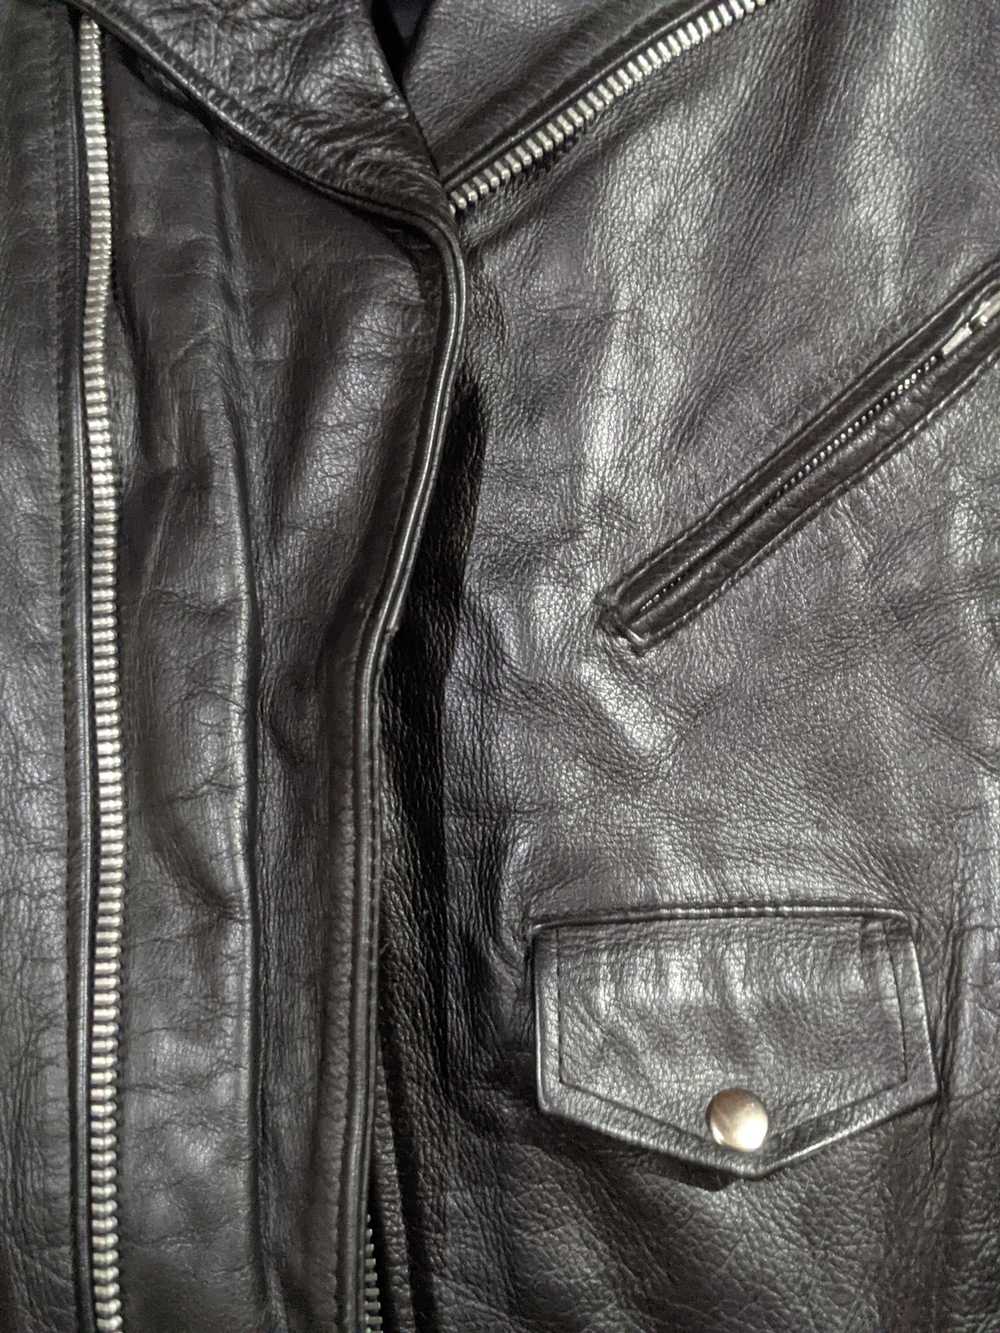 Vintage BLL Heavy Leather Cruiser Jacket - image 1